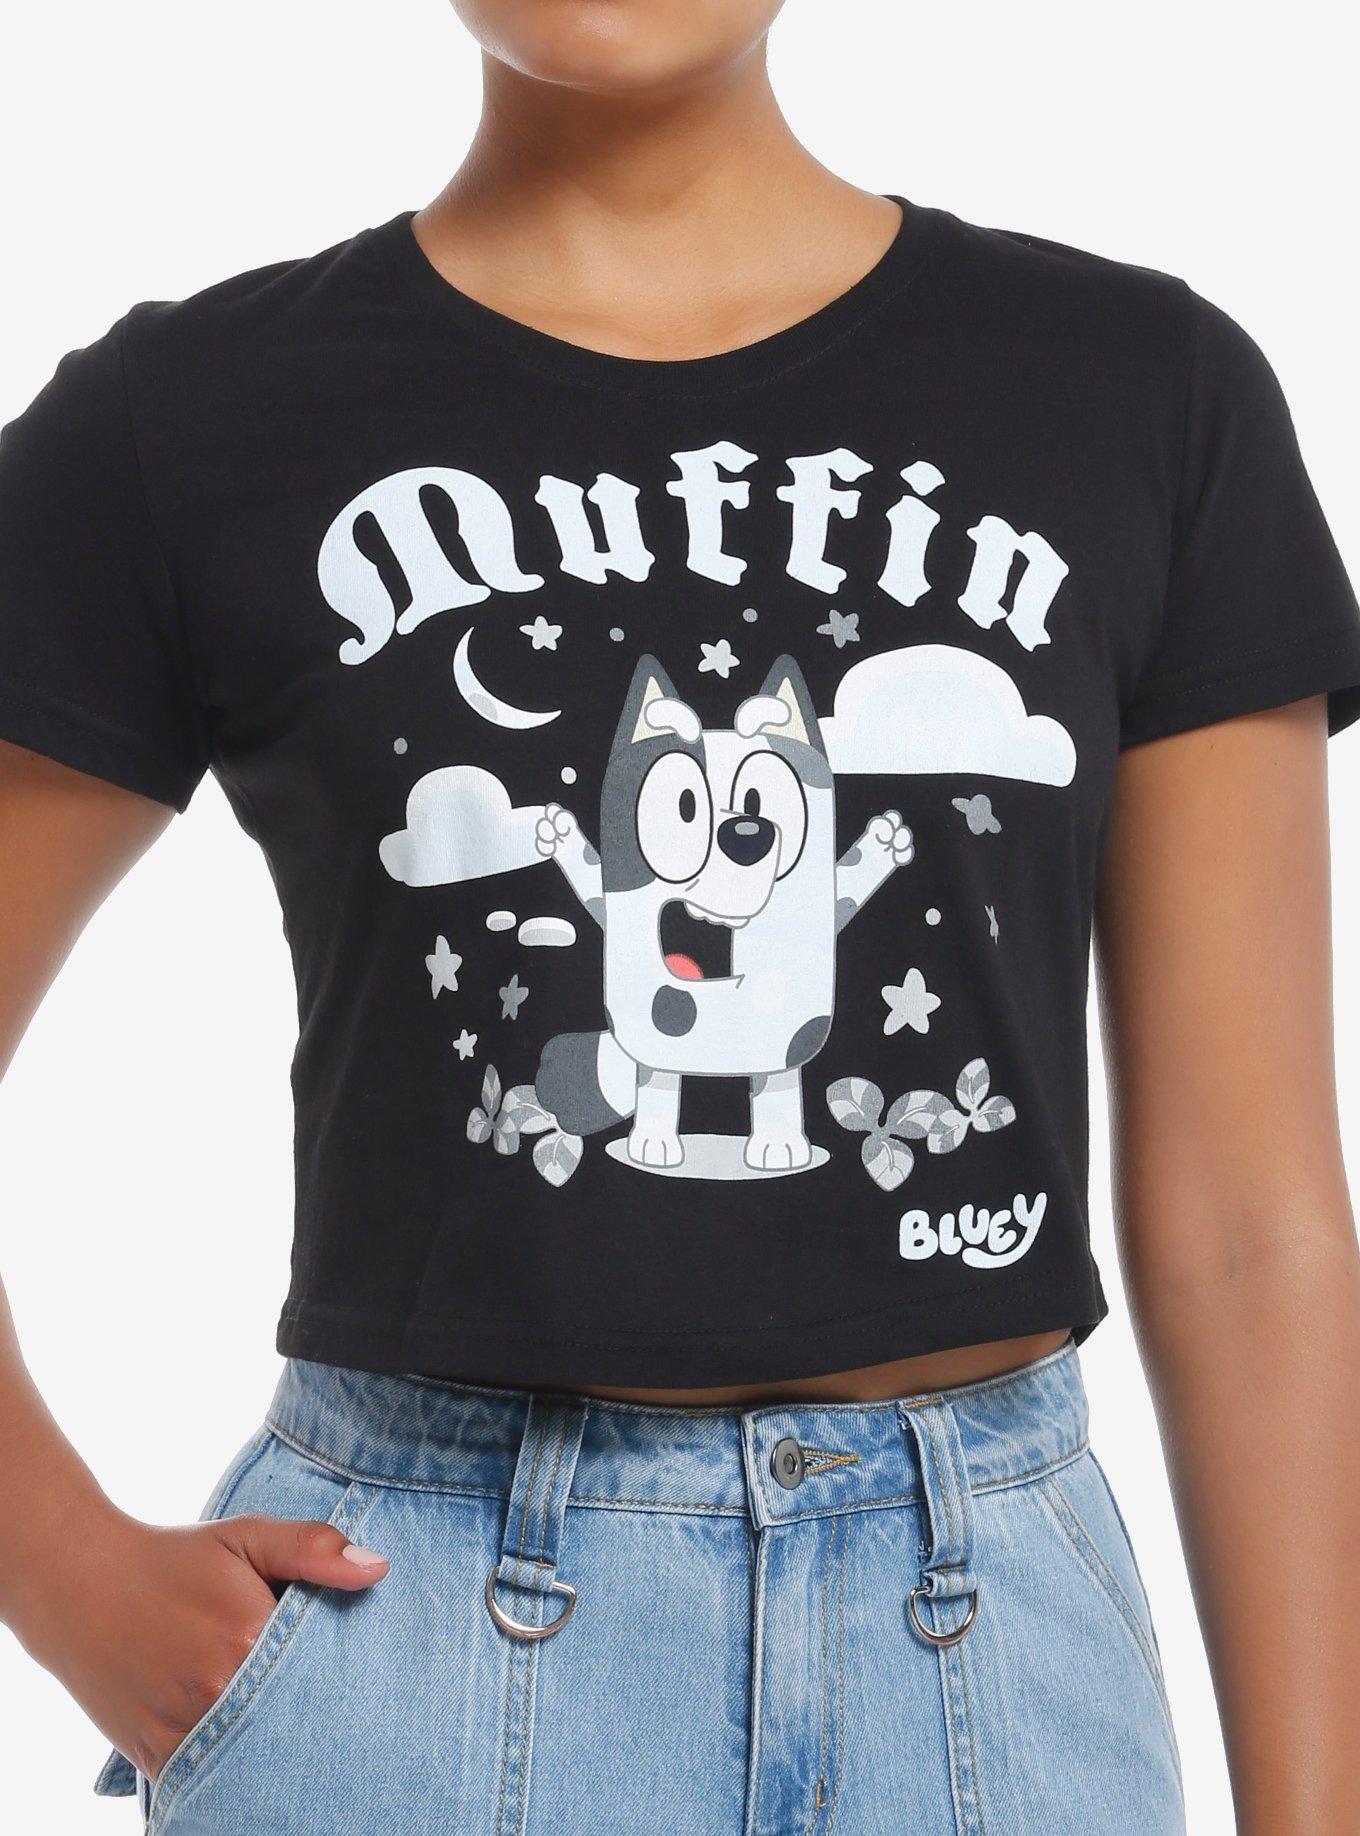 Bluey Muffin Tonal Girls Baby T-Shirt, , hi-res